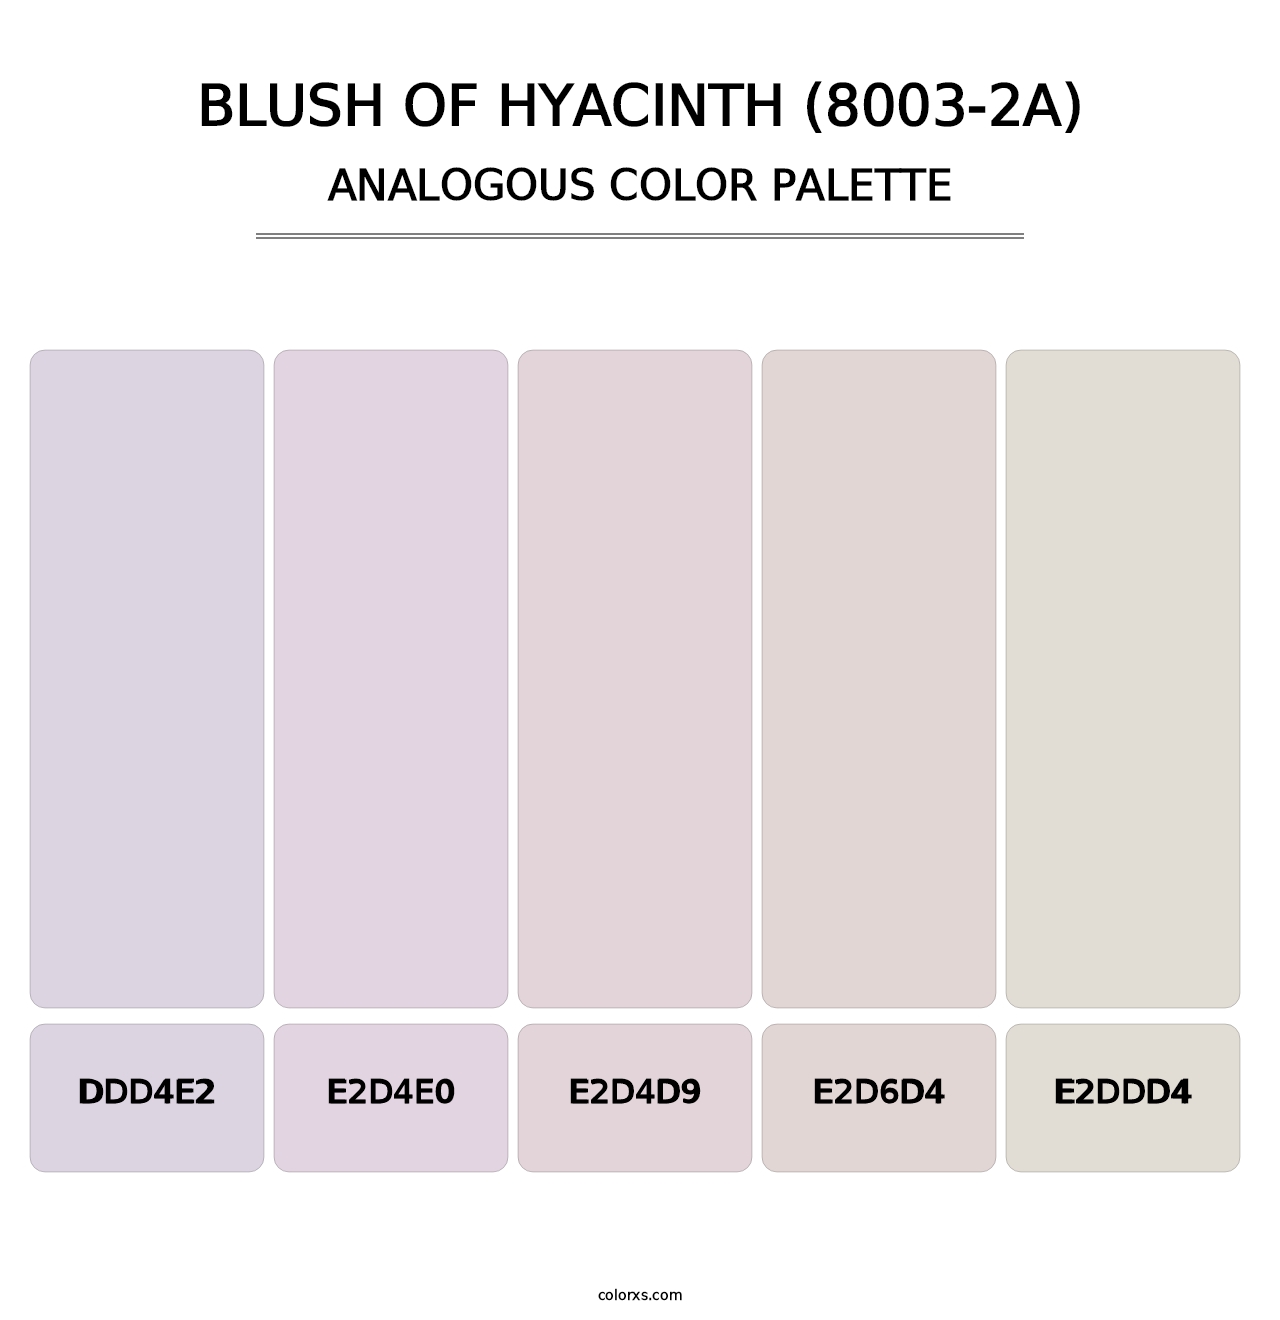 Blush of Hyacinth (8003-2A) - Analogous Color Palette